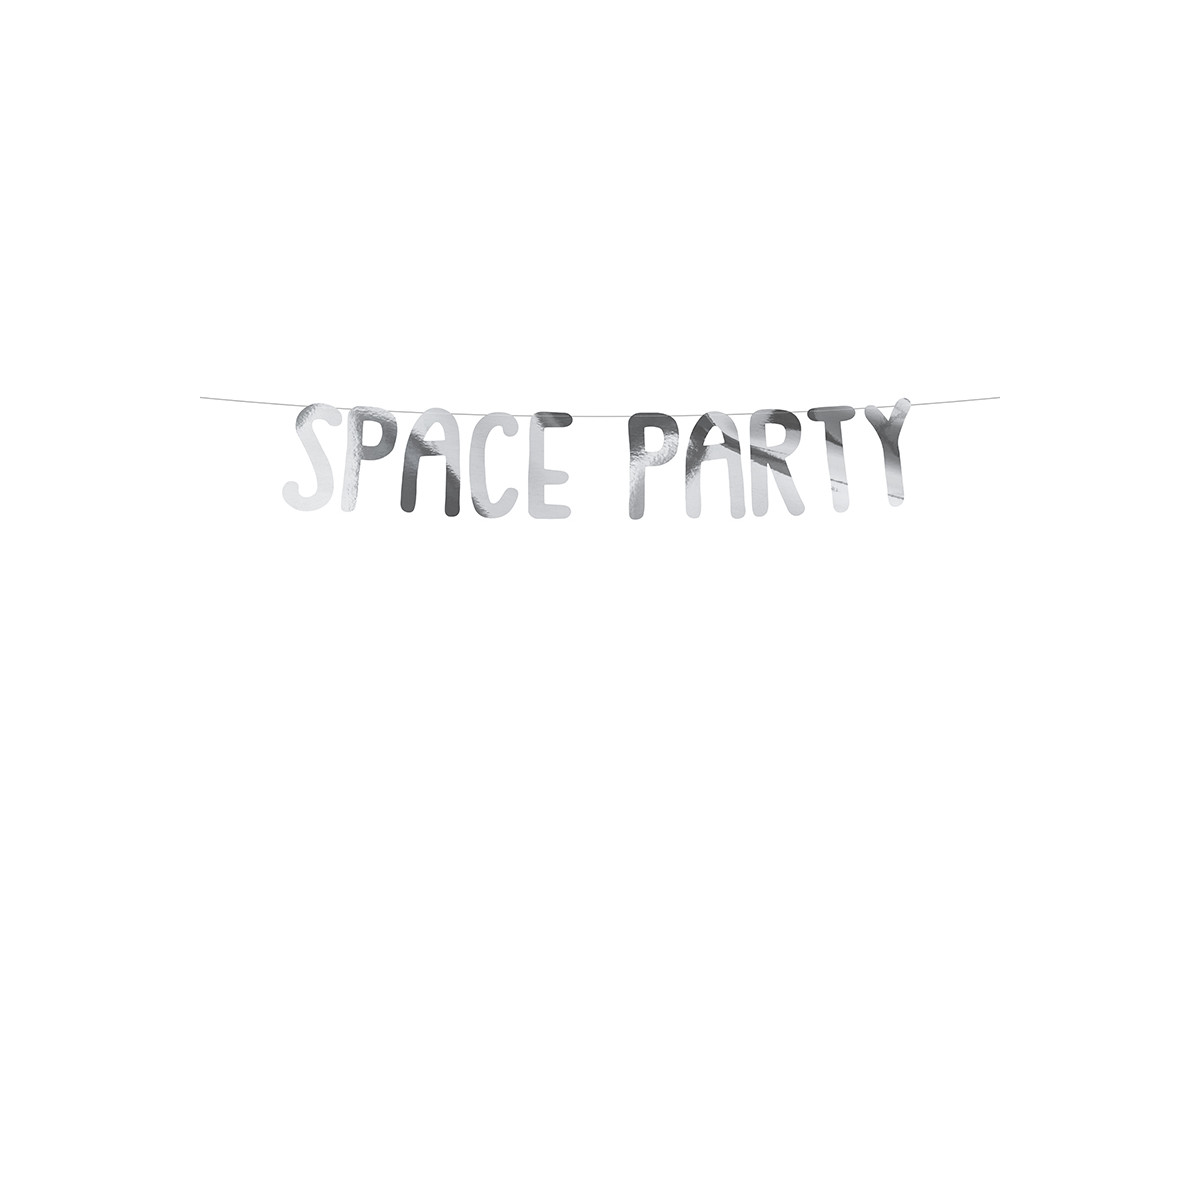 guirlande anniversaire Space Party